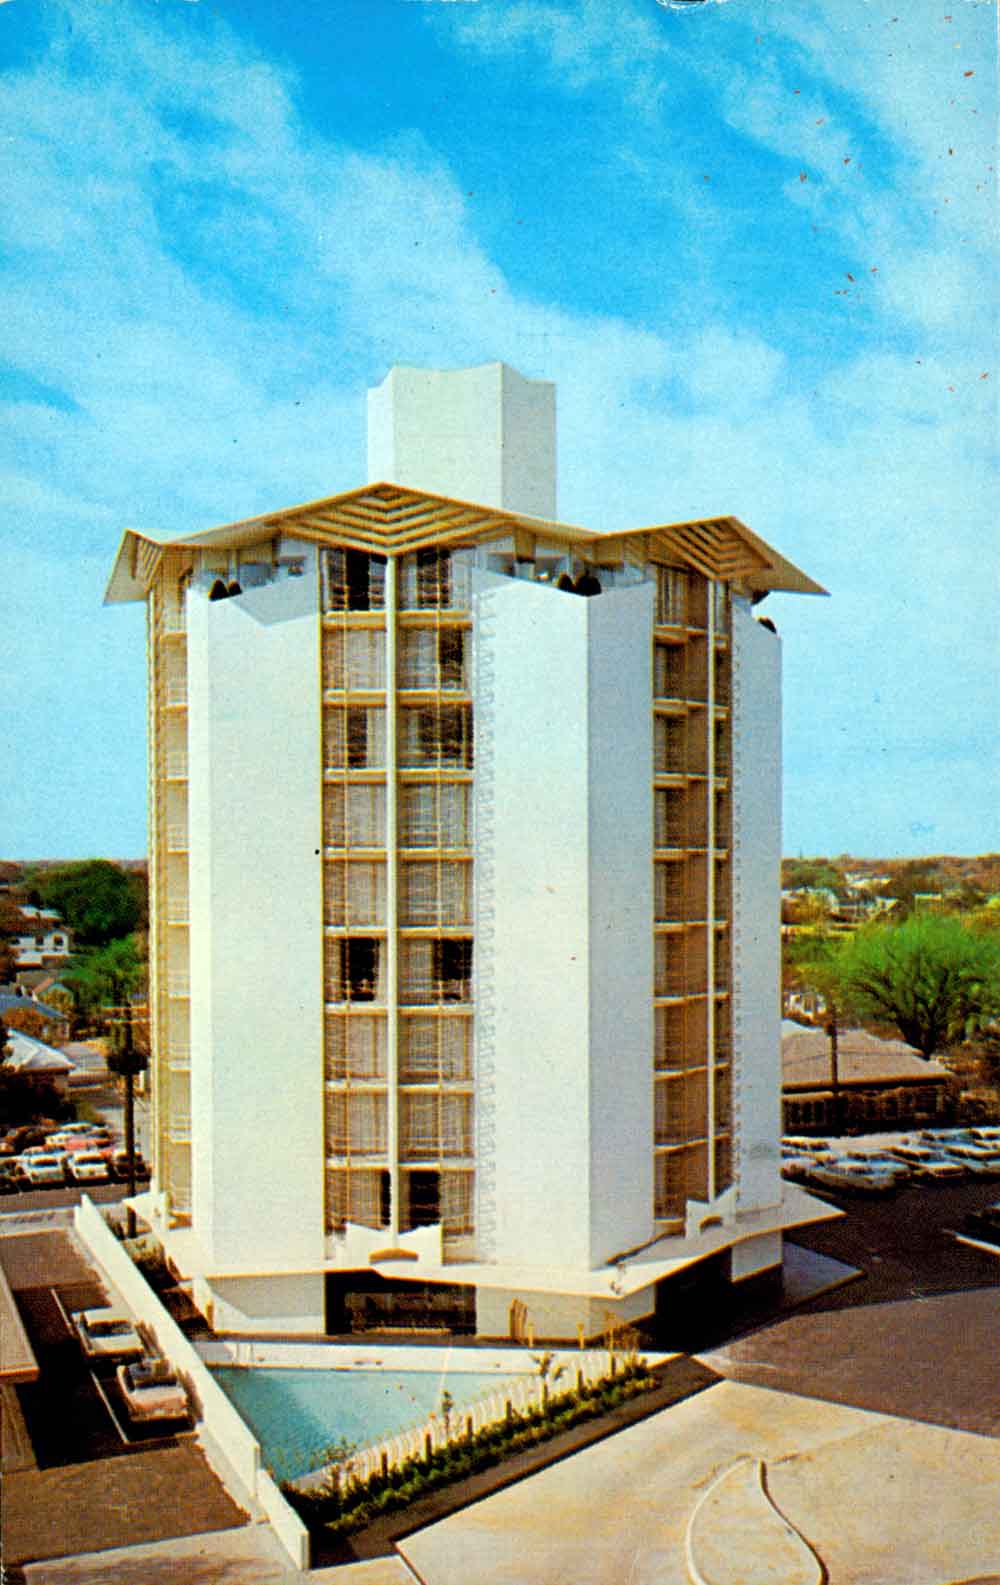 (RACp.2010.27.04) - Plaza Tower Hotel, 1117 N Shartel, postmarked 27 Jan 1961